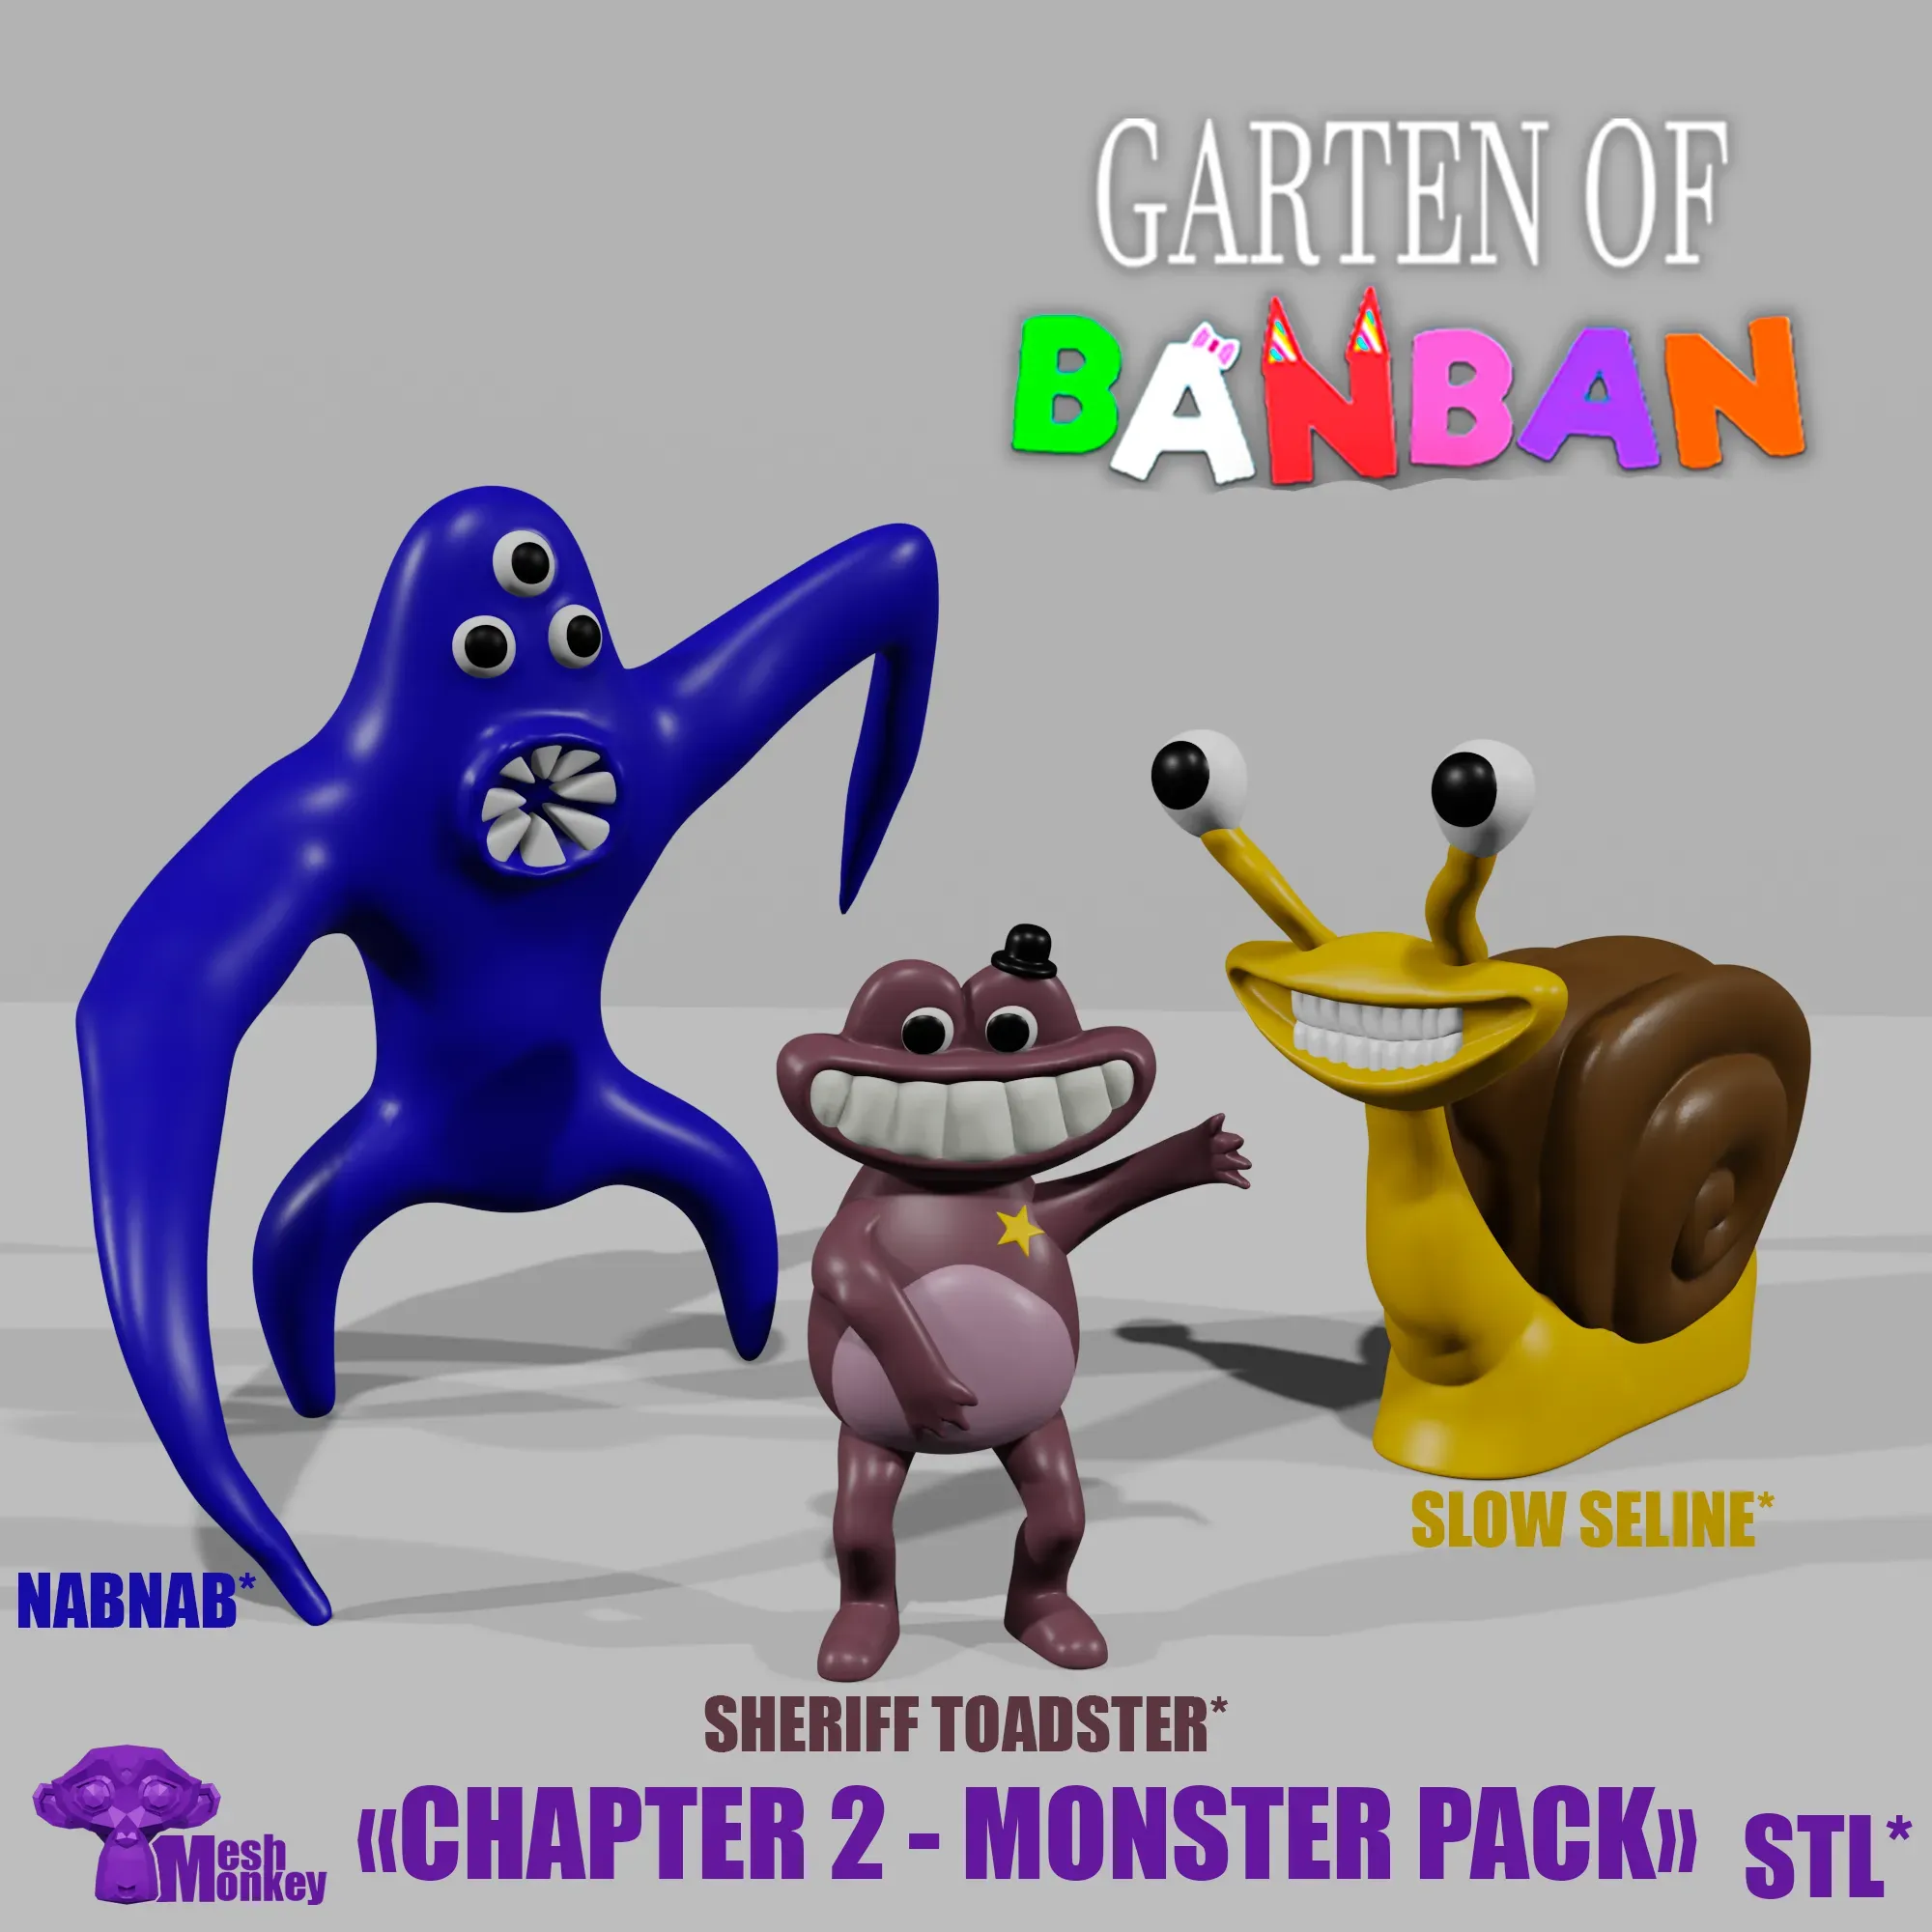 NABNAB FROM GARTEN OF BANBAN 3 FAN ART V.2 | BGGT